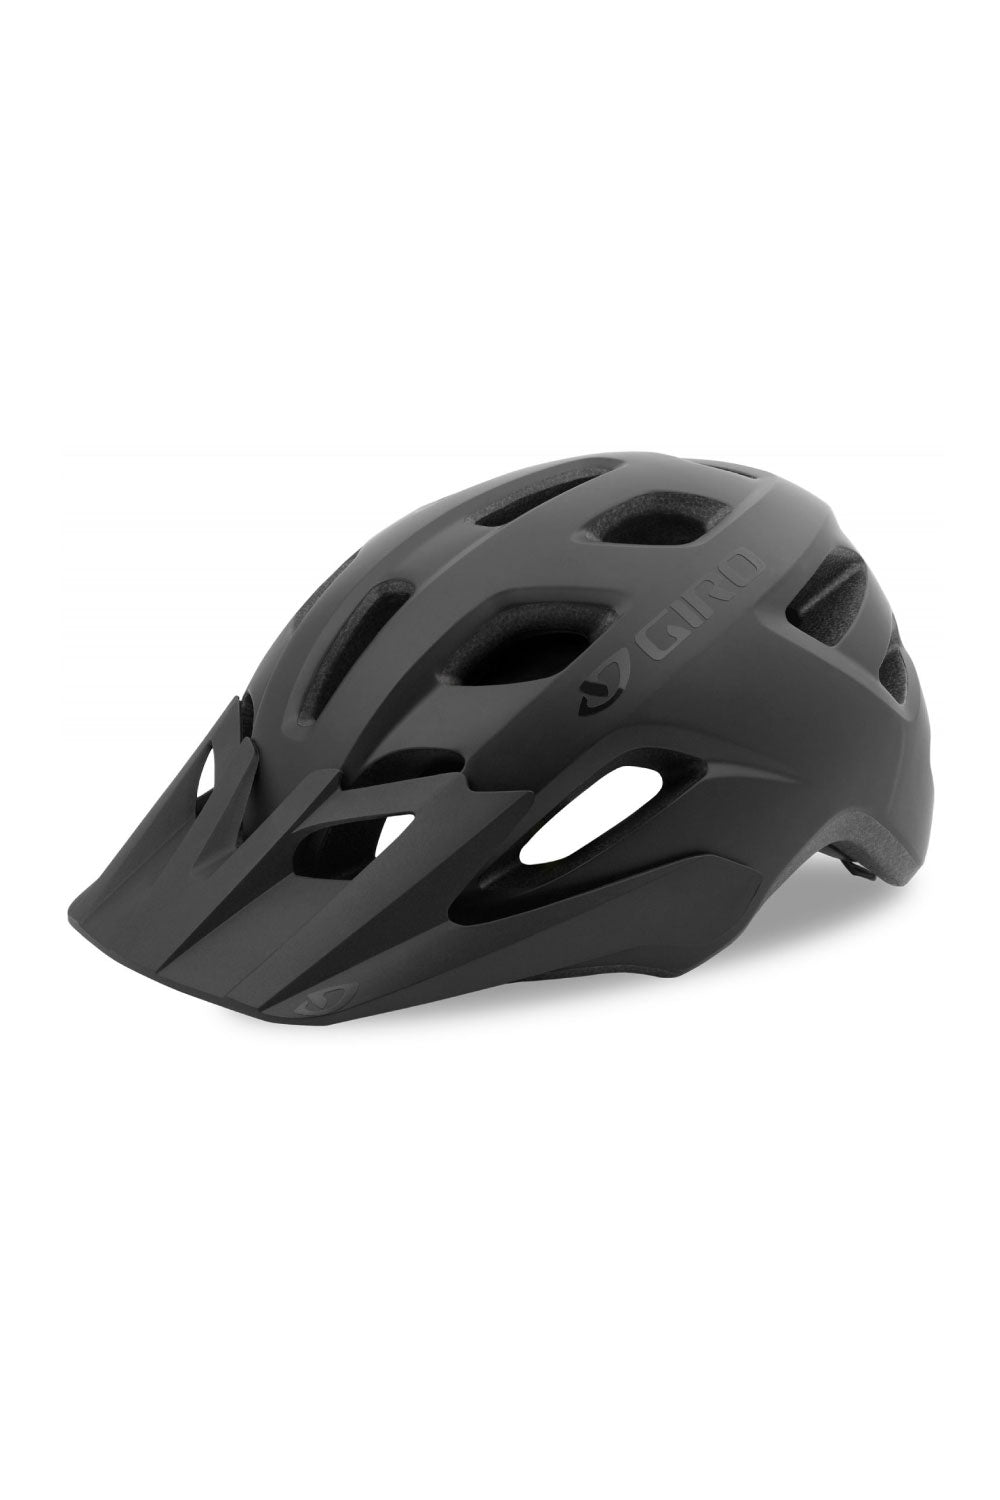 mountain bike helmets for adults